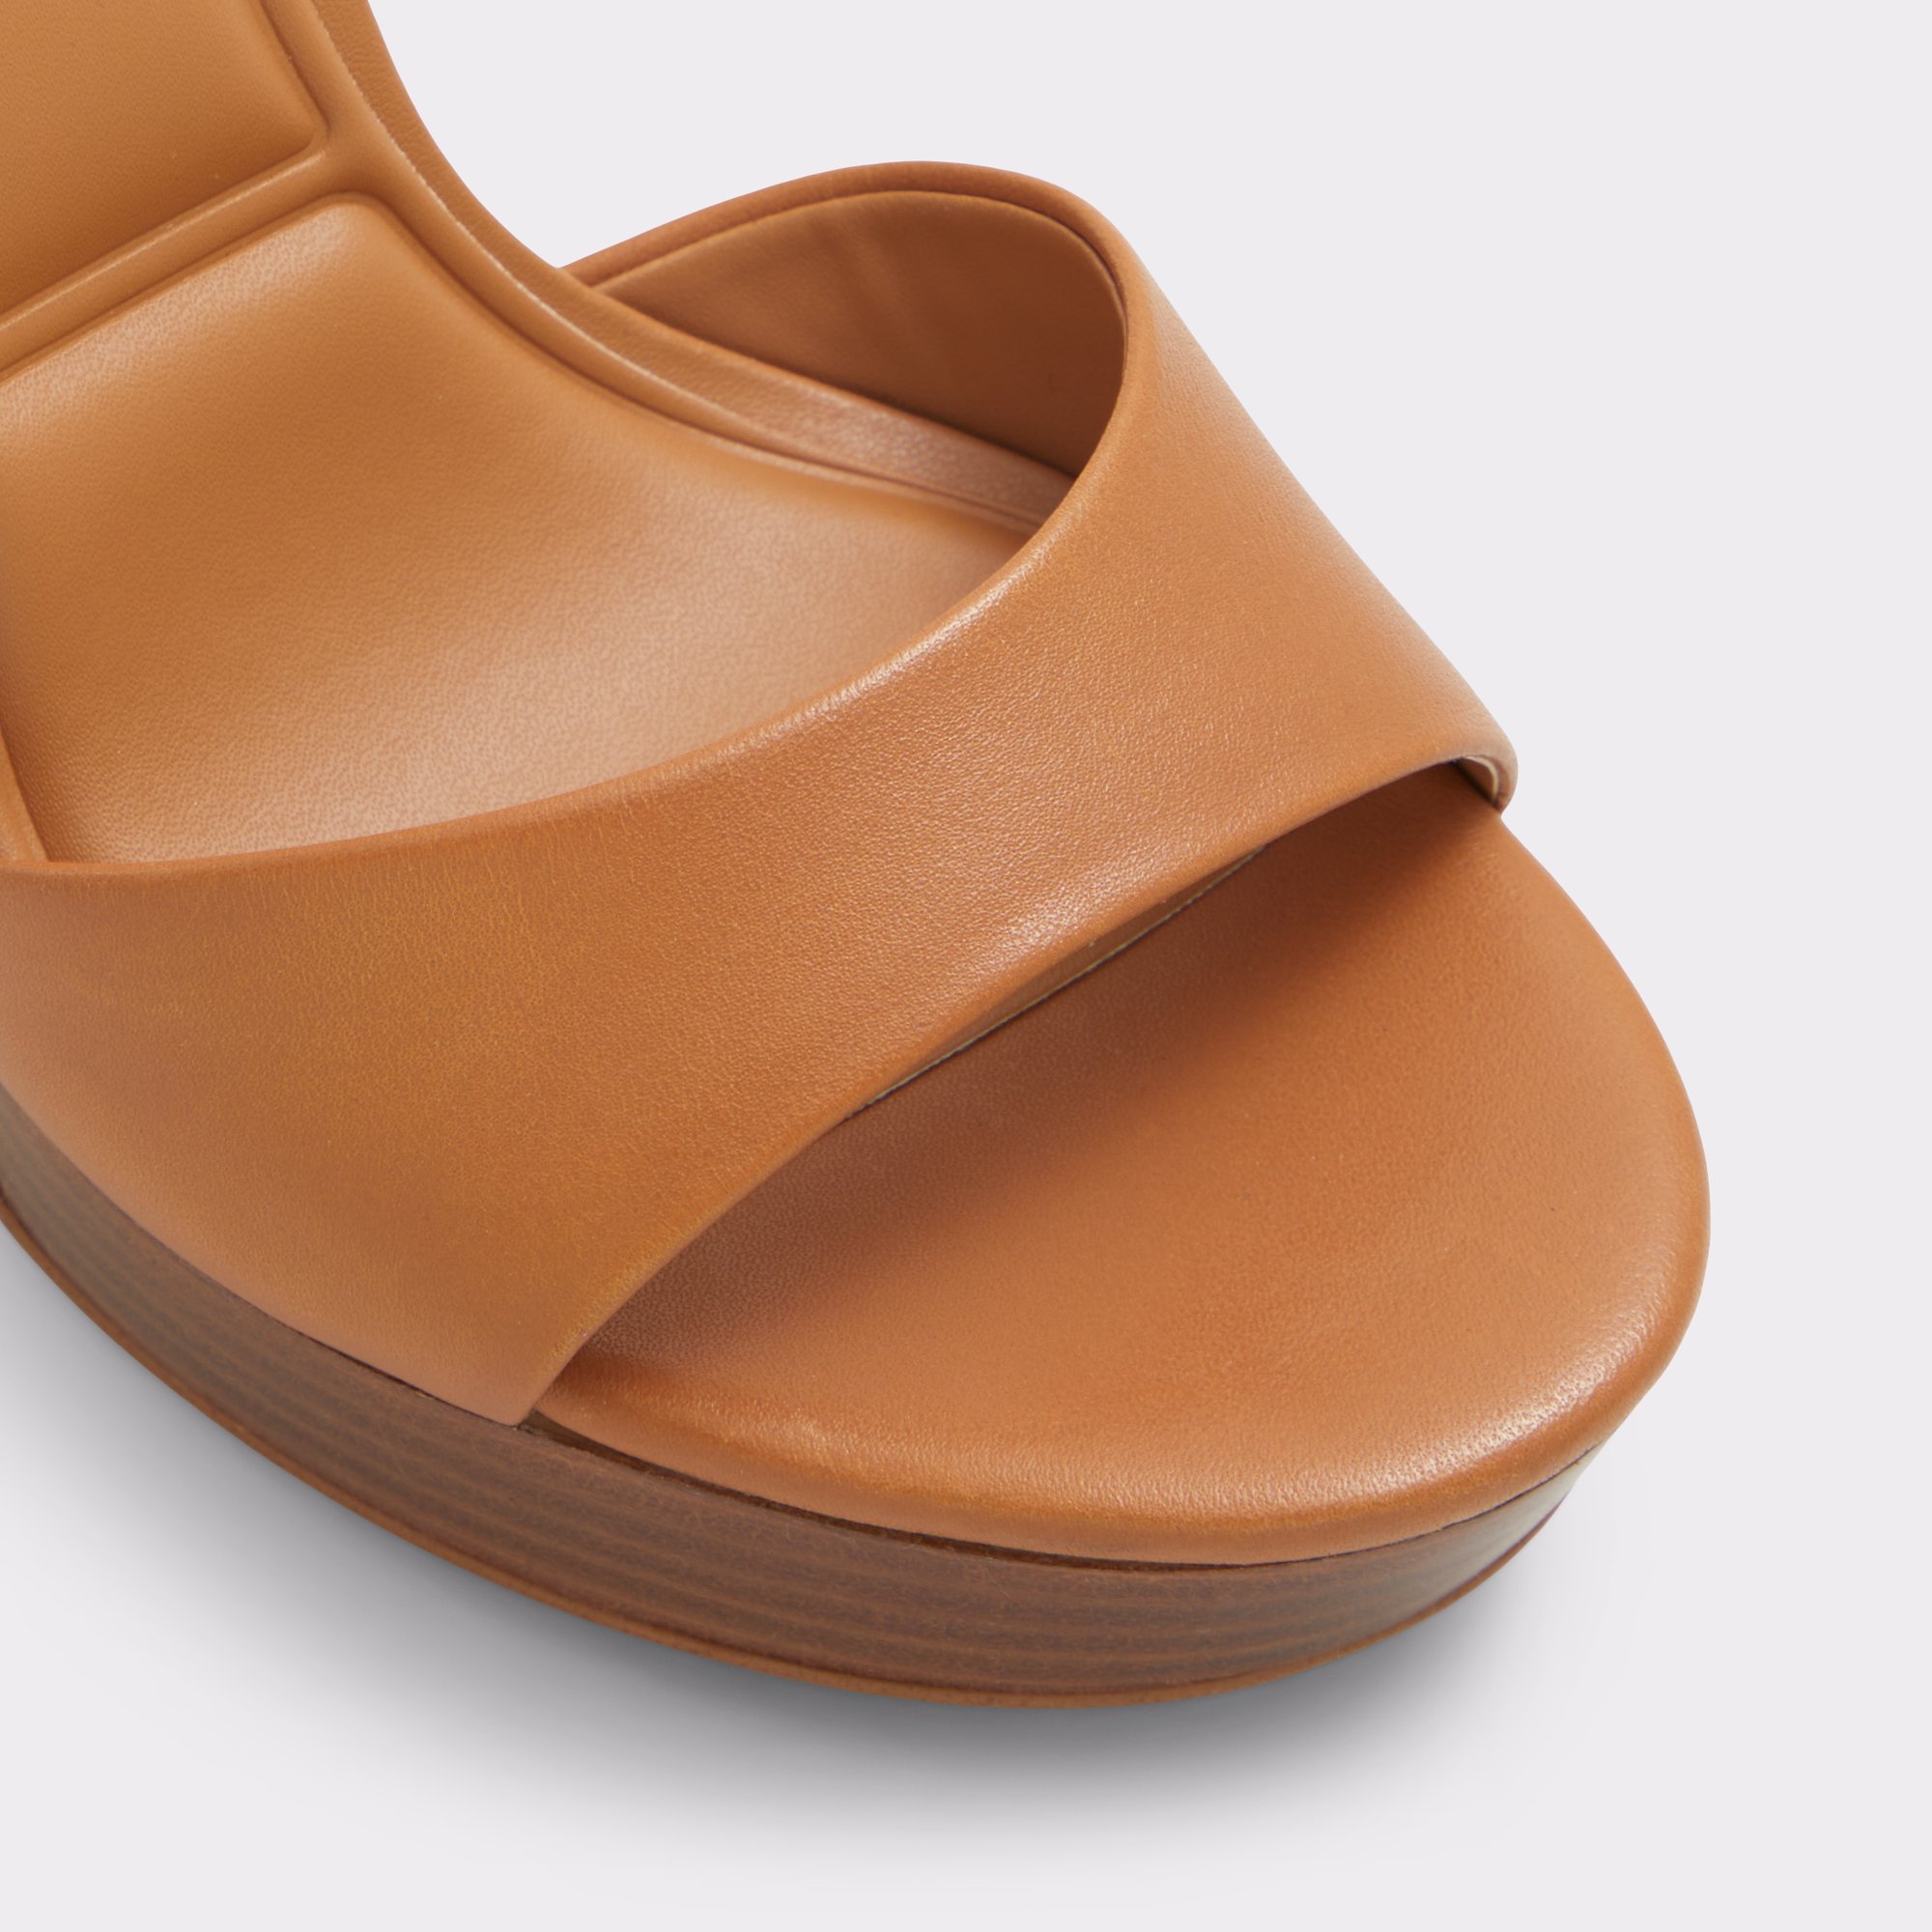 Enaegyn2.0 Light Brown Women's Heeled sandals | ALDO Canada